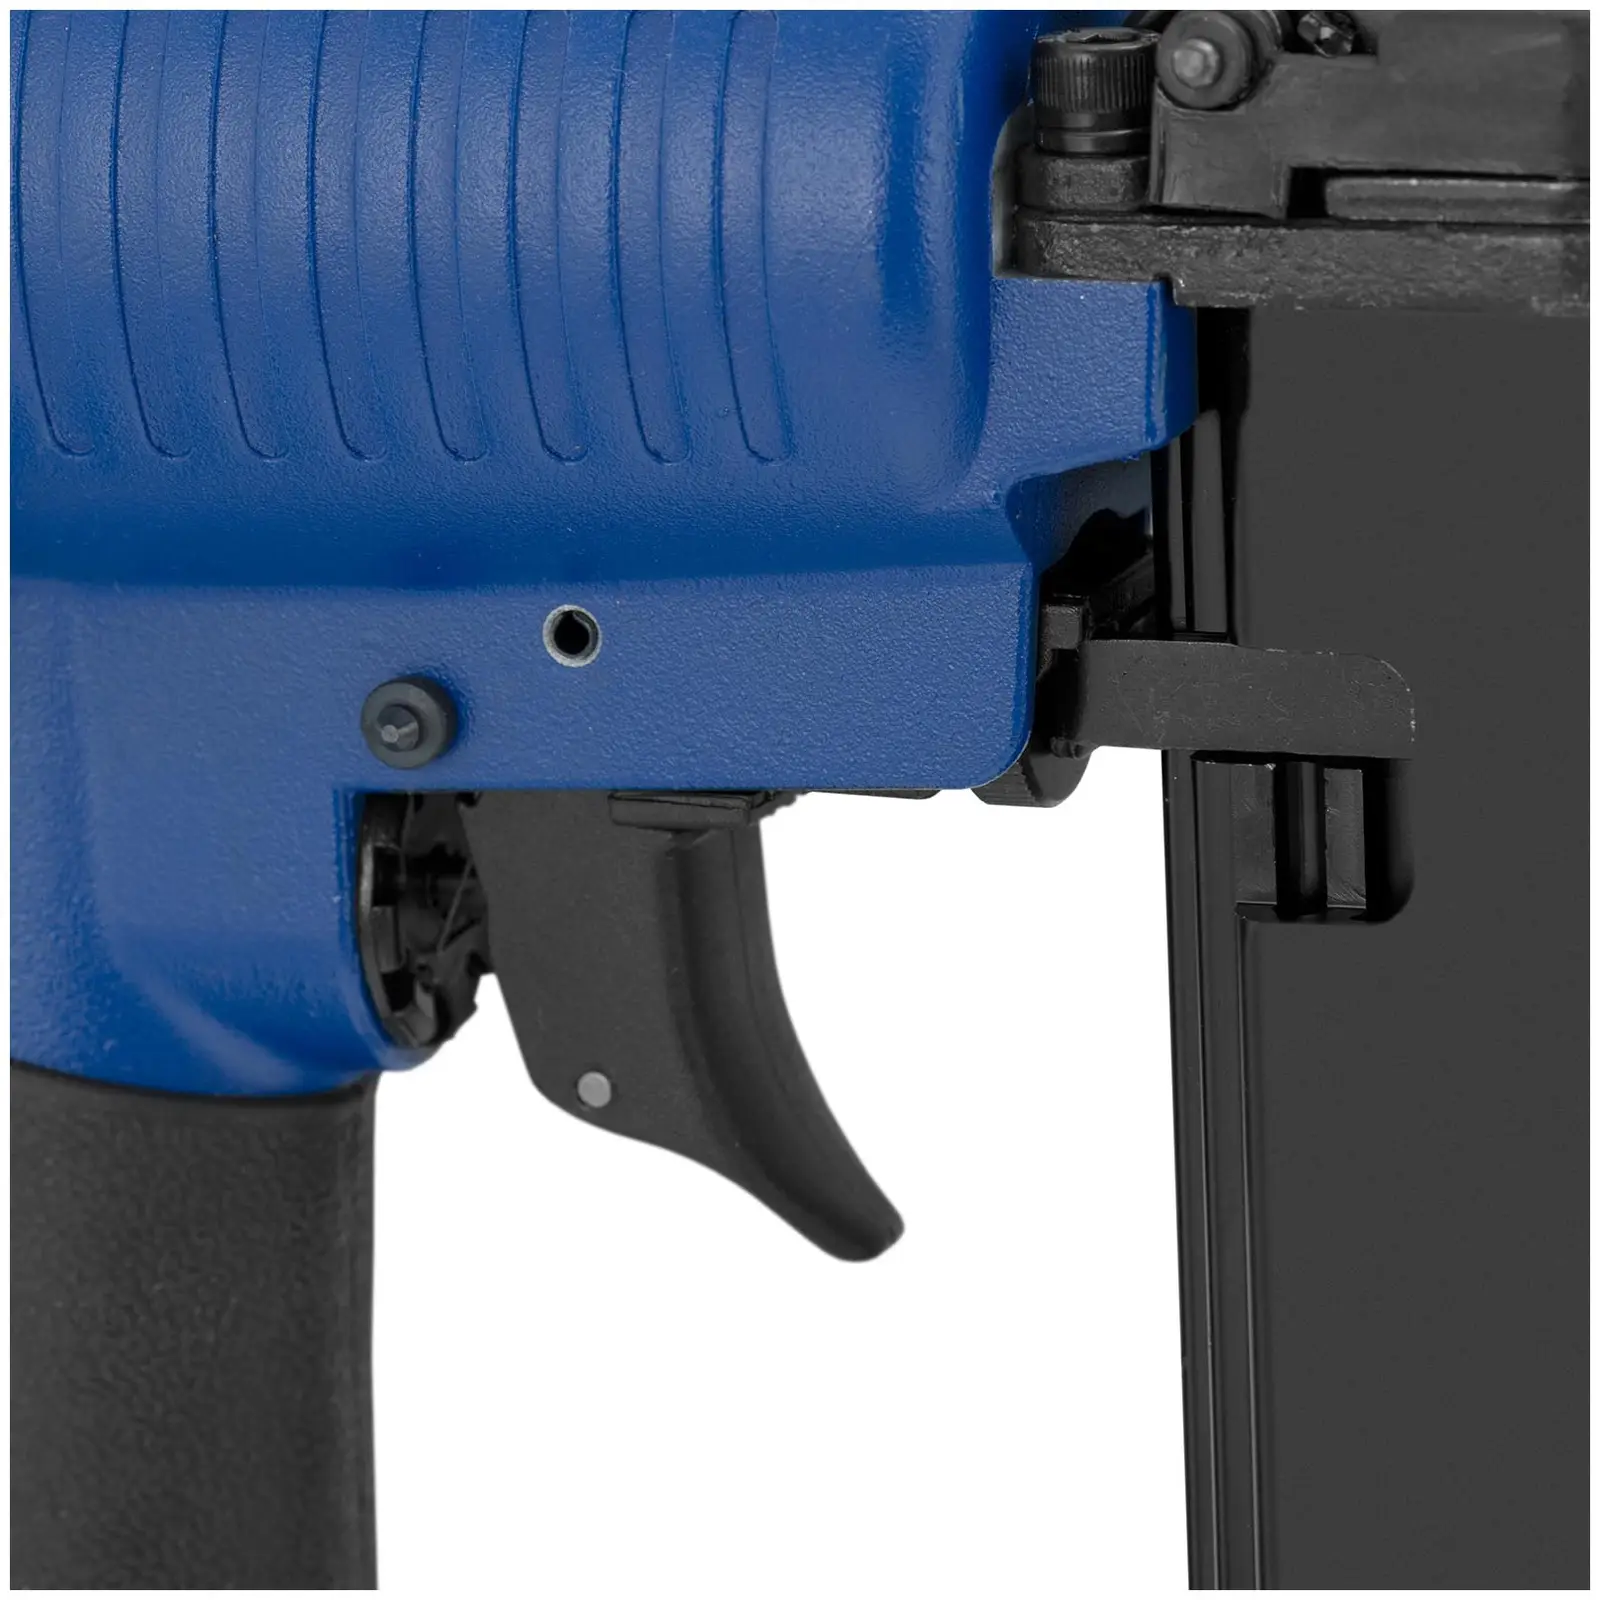 Air Nail Gun - for nail lengths: 15 / 25 / 32 / 40 / 50  mm - holds up to 110 nails